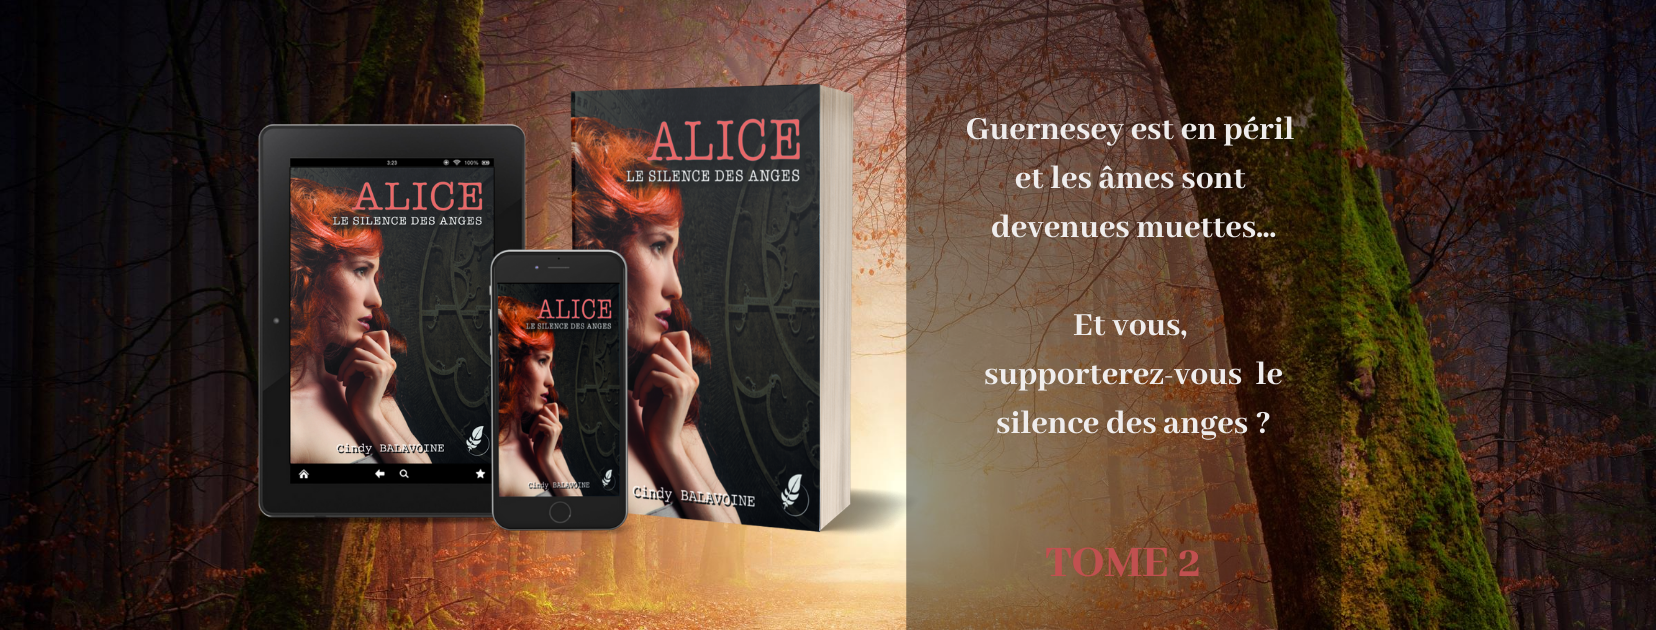 slider Alice, le silence des anges par Cindy BALAVOINE